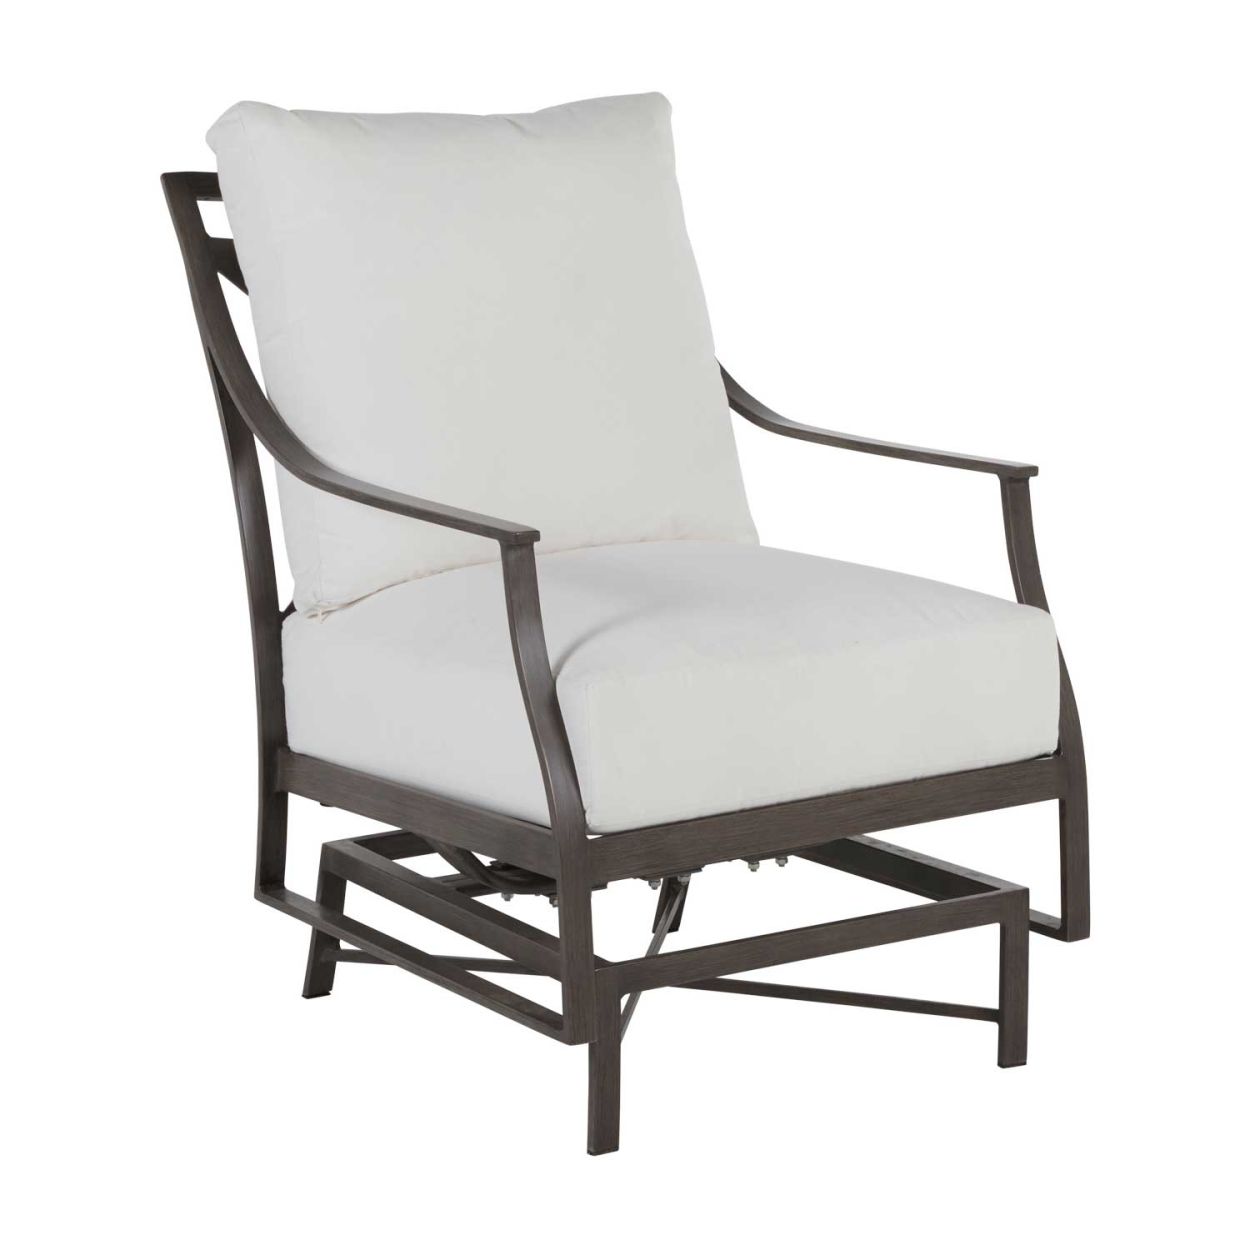 Monaco Aluminum Spring Outdoor Lounge- Slate Grey with cushion